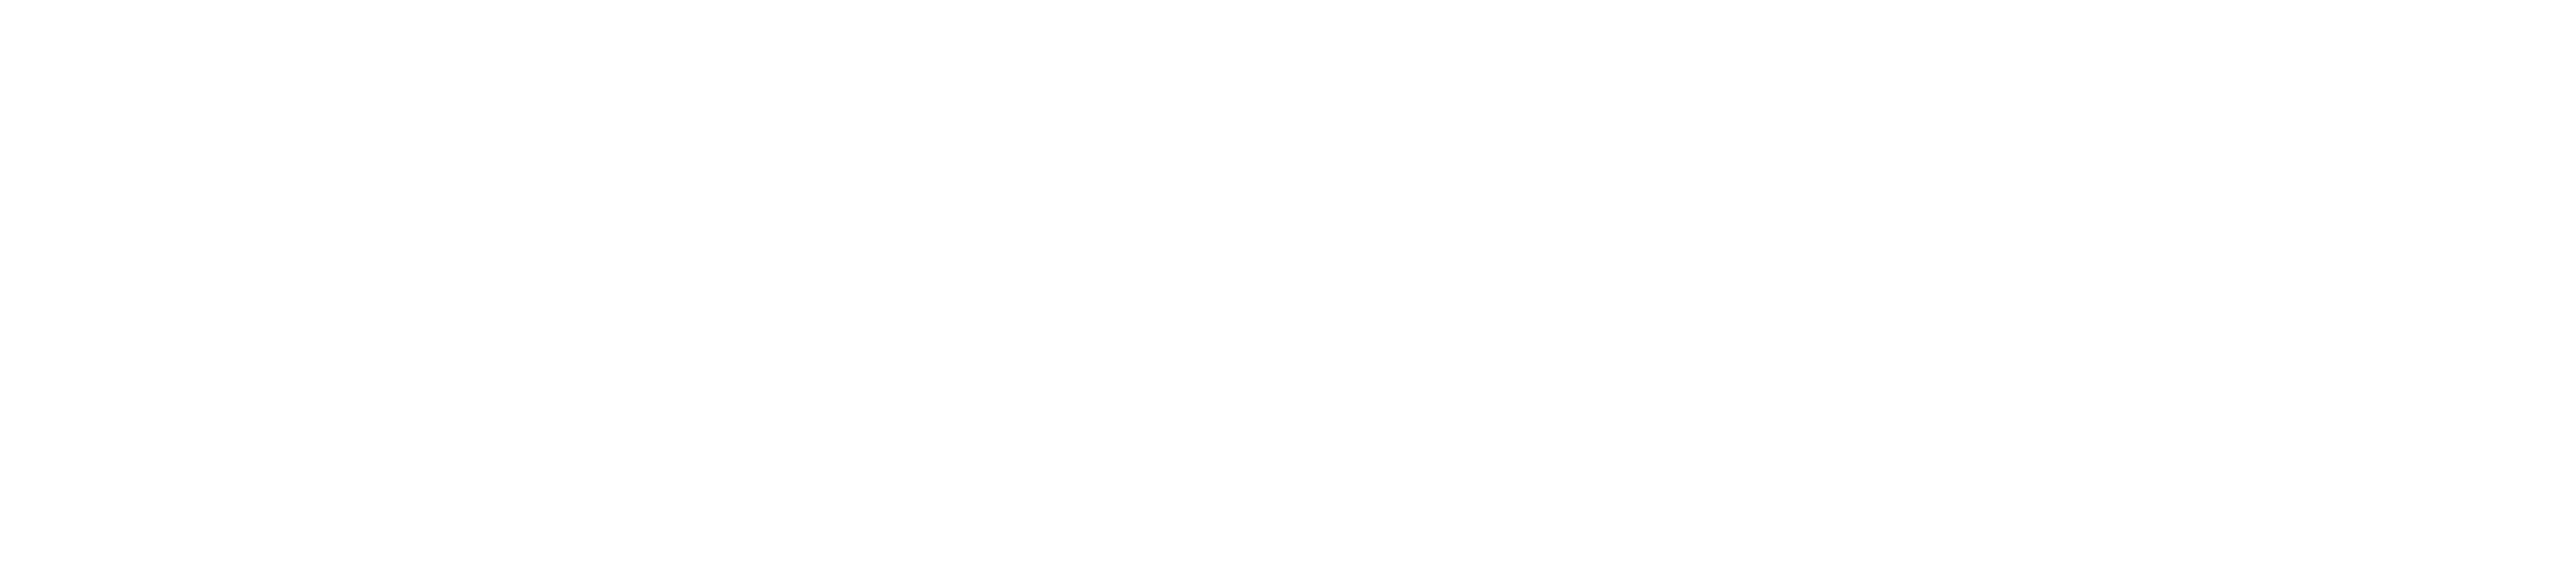 WasteDesk Logo Wit